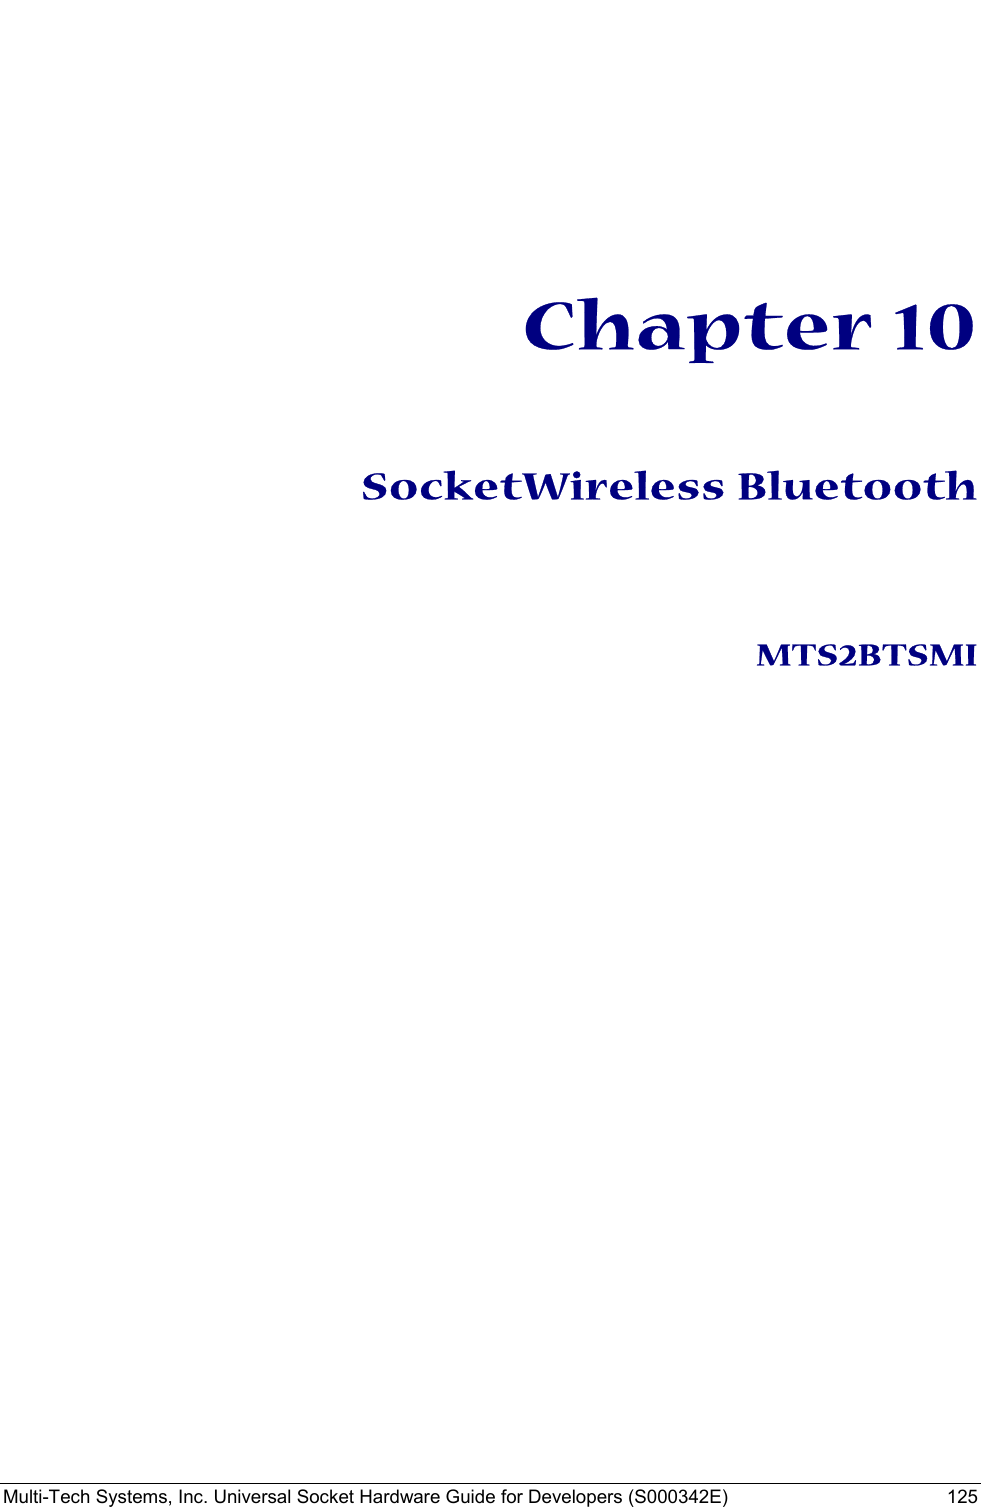  Multi-Tech Systems, Inc. Universal Socket Hardware Guide for Developers (S000342E)  125           Chapter 10    SocketWireless Bluetooth    MTS2BTSMI    